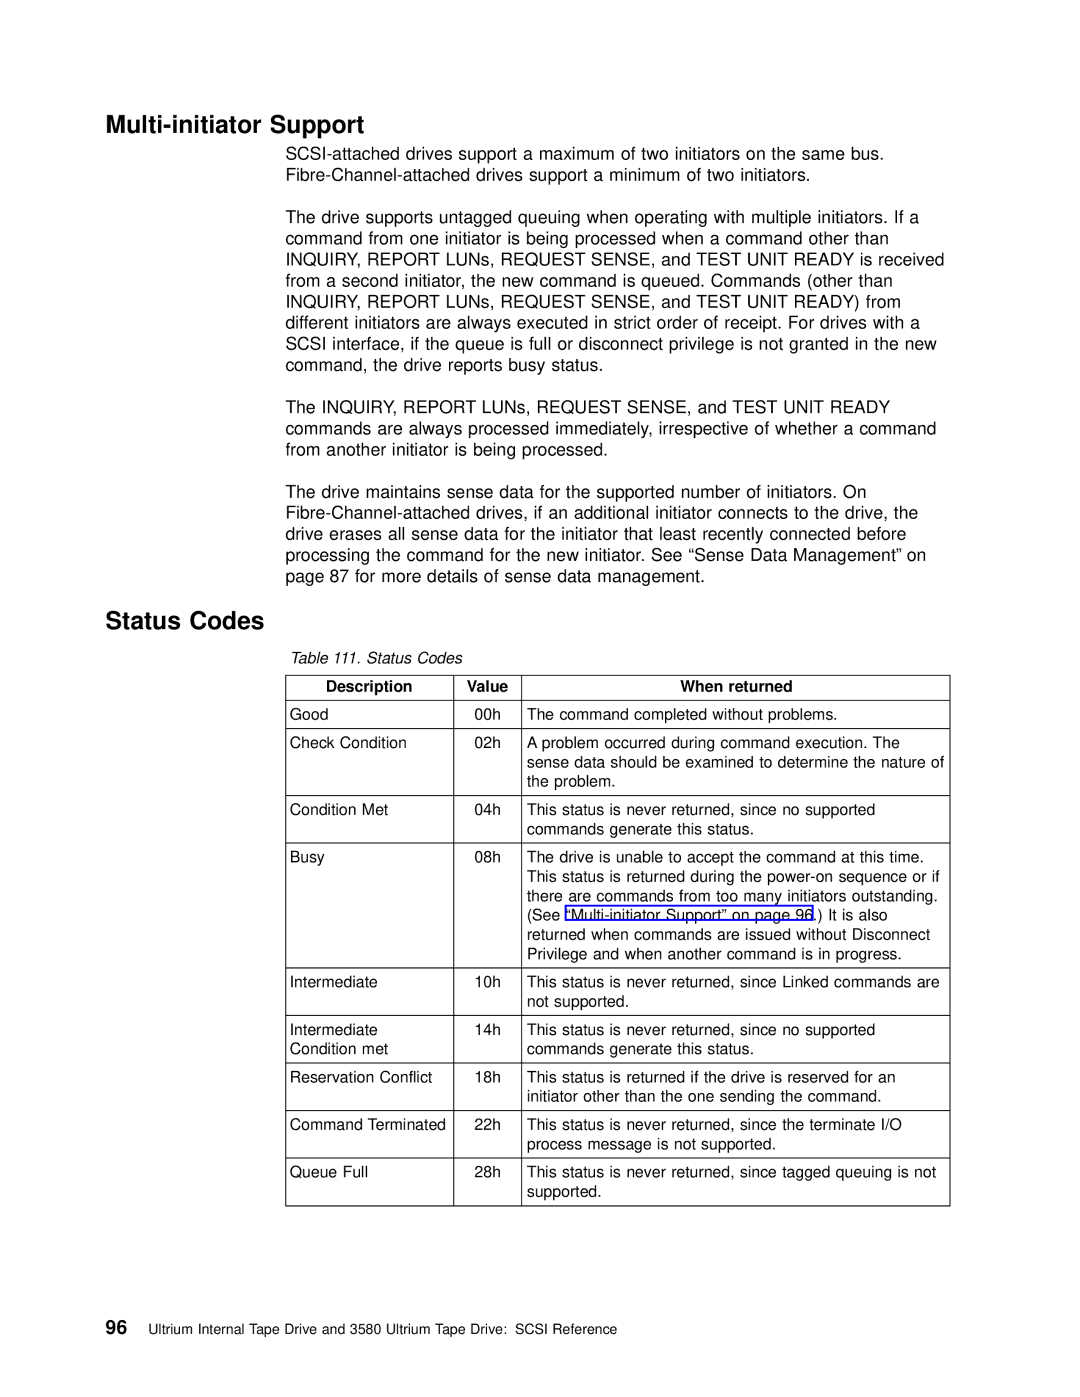 IBM T200F manual Multi-initiator Support, Status Codes, Description Value When returned 